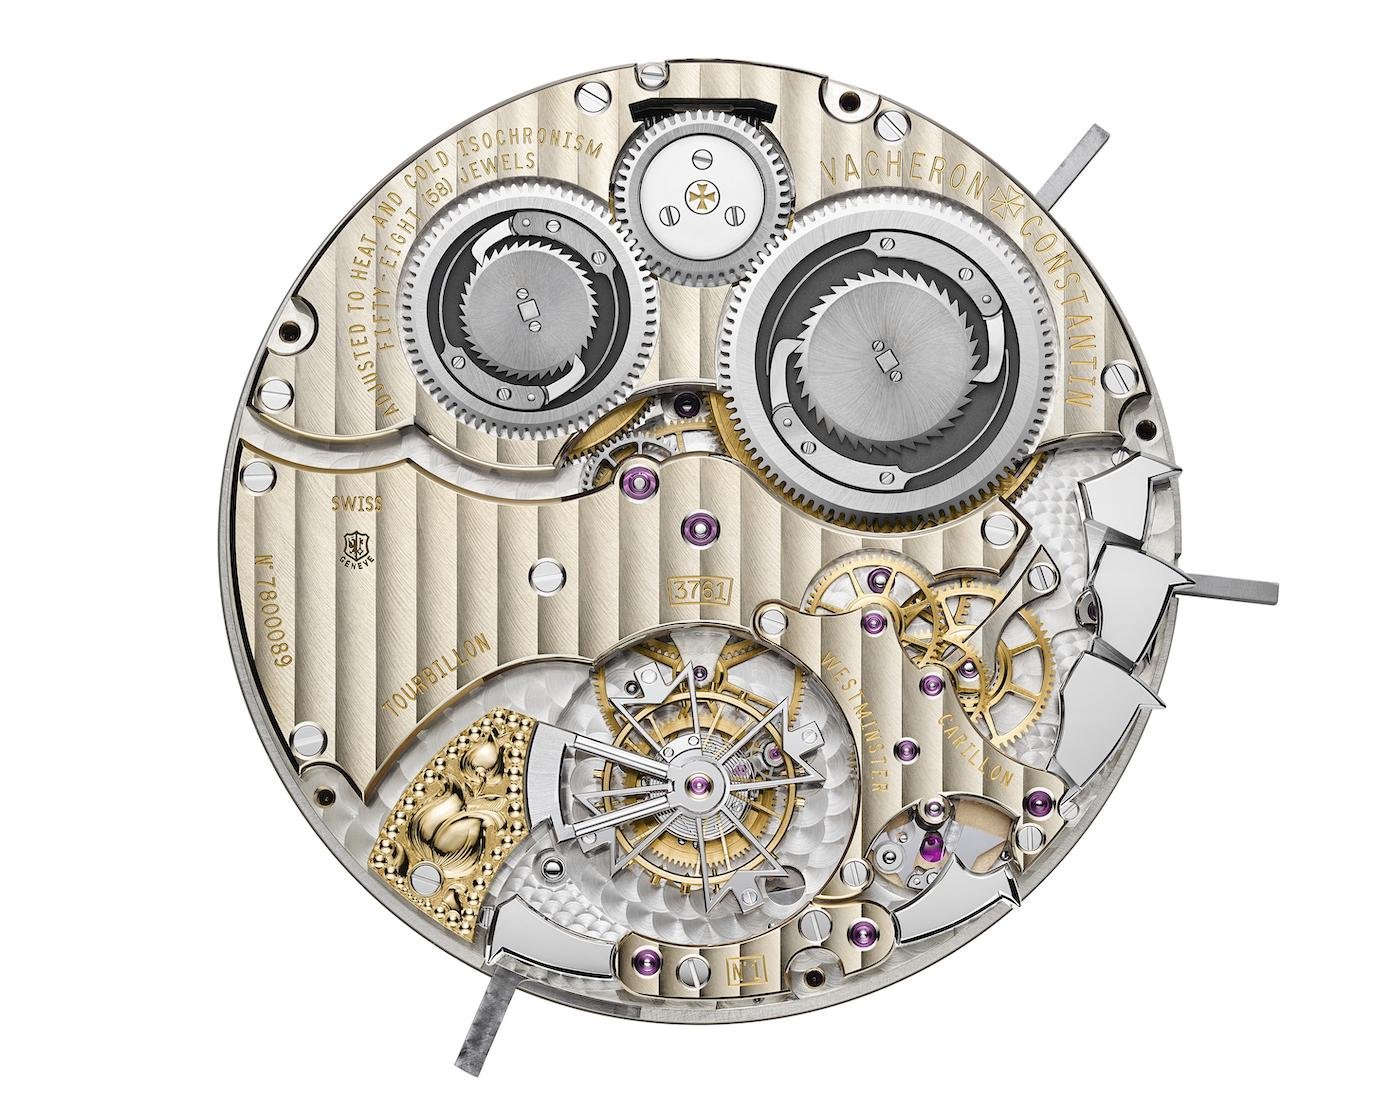 Vacheron Constantin unveils an exceptional bespoke pocket watch